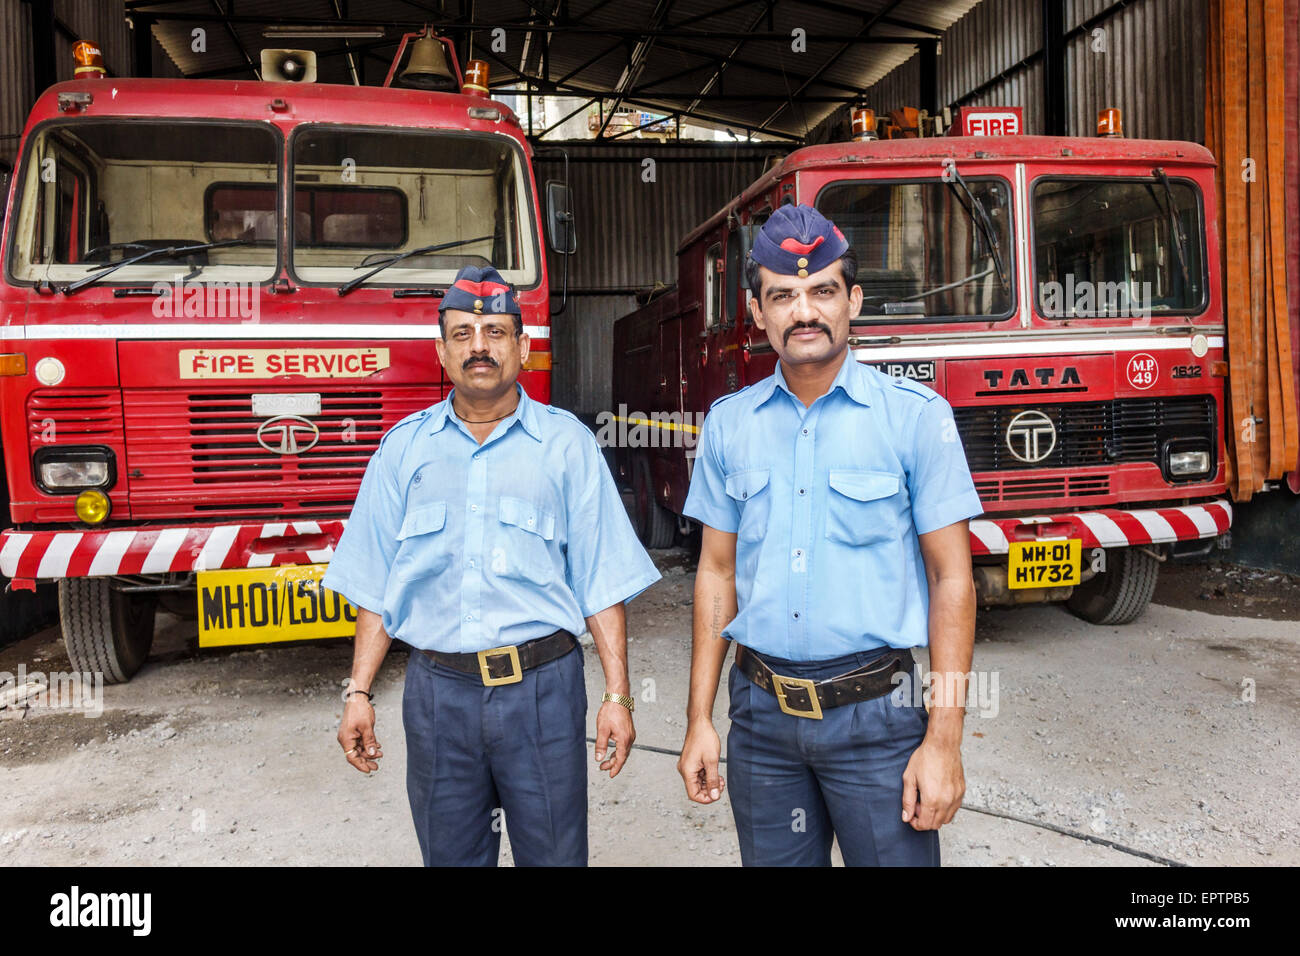 Mumbai India,Dharavi,Shahu Nagar Road,tugurios,departamento de bomberos,garaje,bomberos,bomberos,uniforme,hombre hombres hombres,trabajadores empleados trabajadores trabajadores trabajadores, Tata,vehi Foto de stock